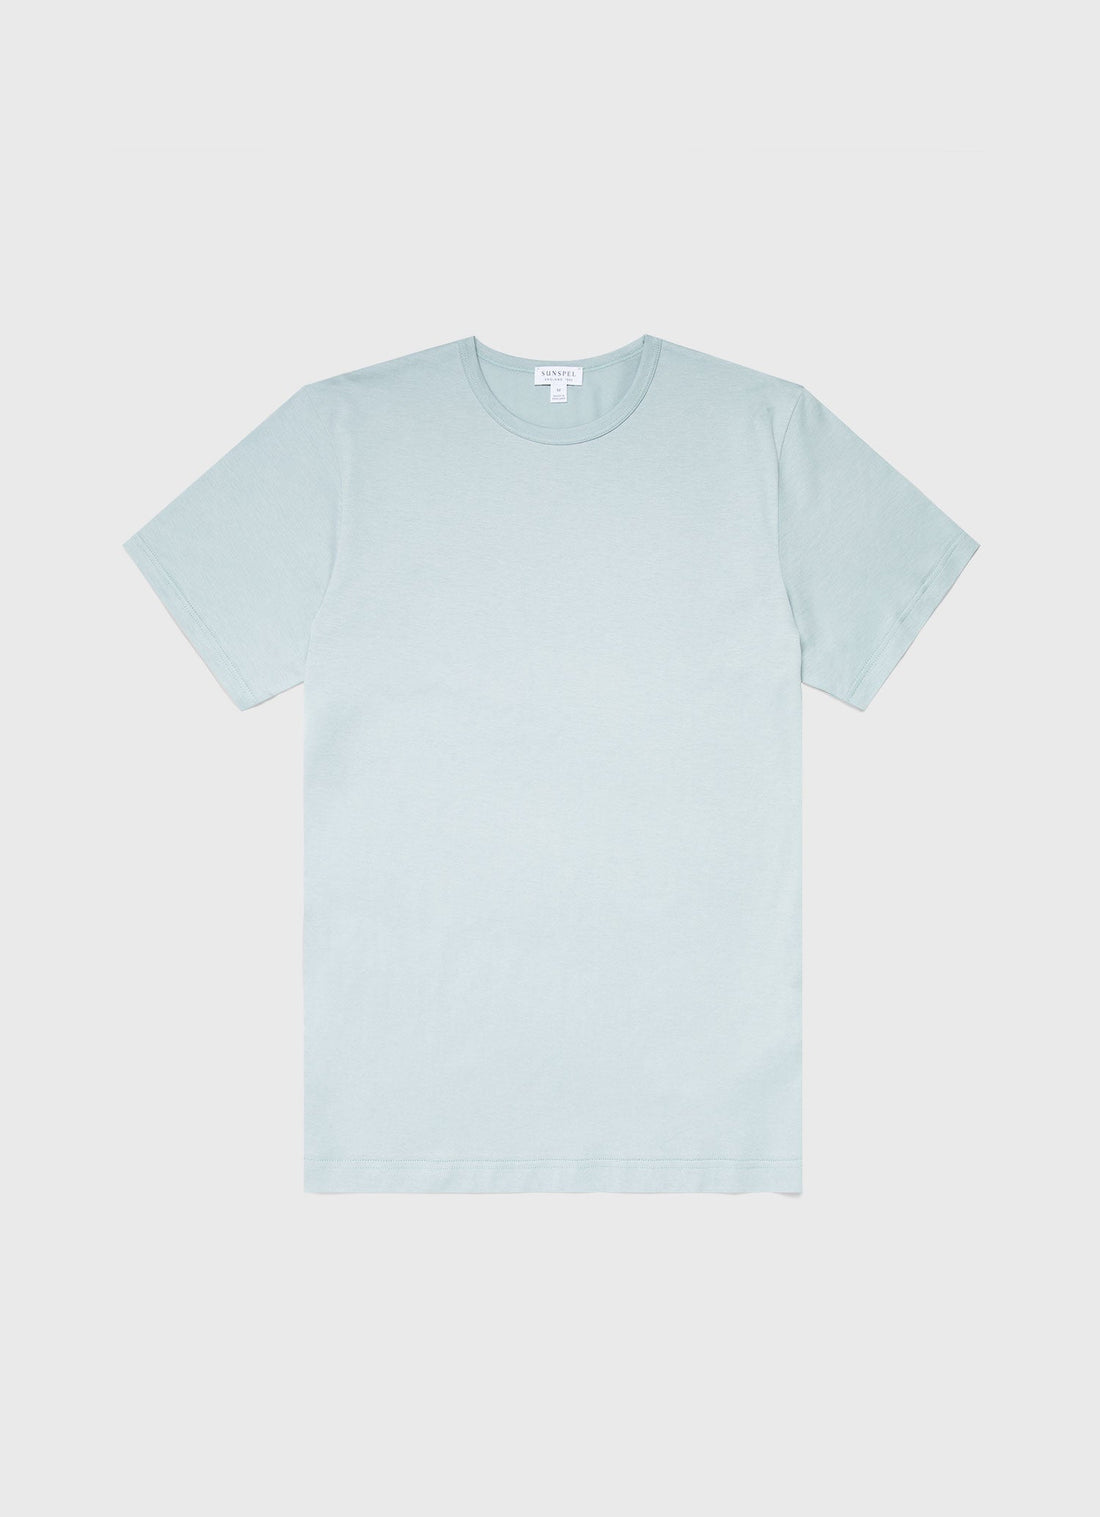 Men's Classic T-shirt in Blue Sage